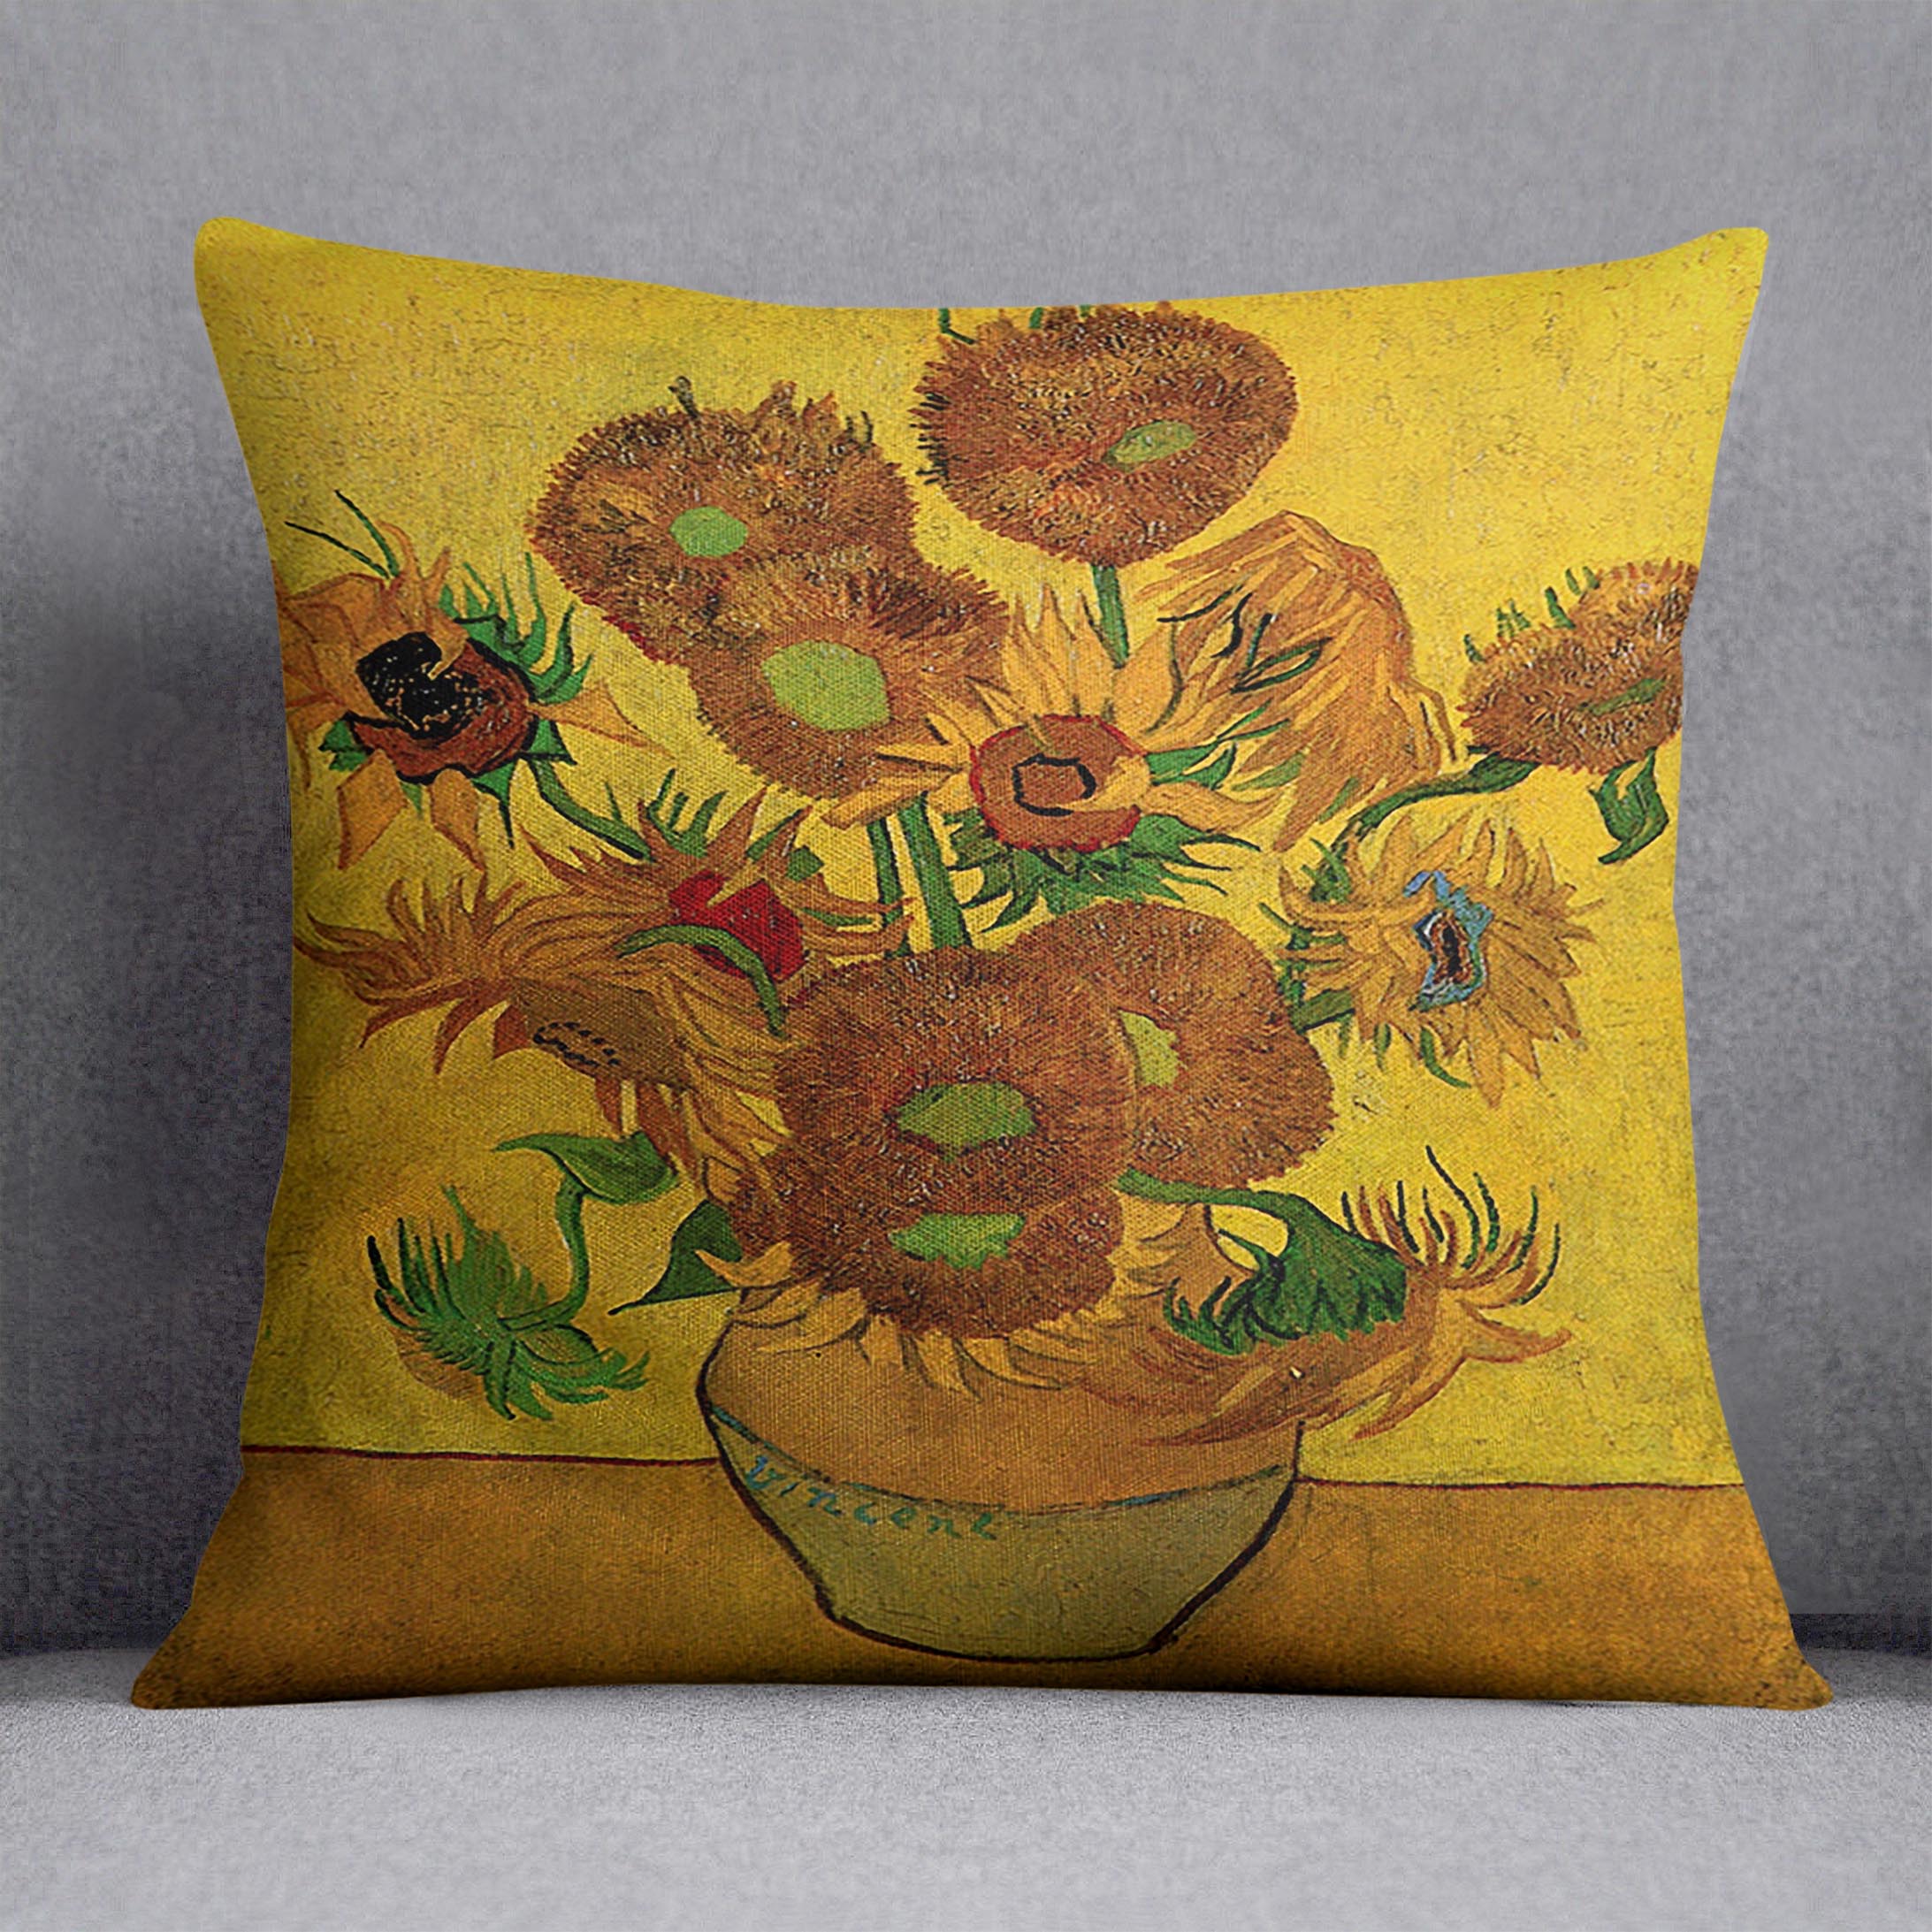 Still Life Vase with Fifteen Sunflowers by Van Gogh Cushion